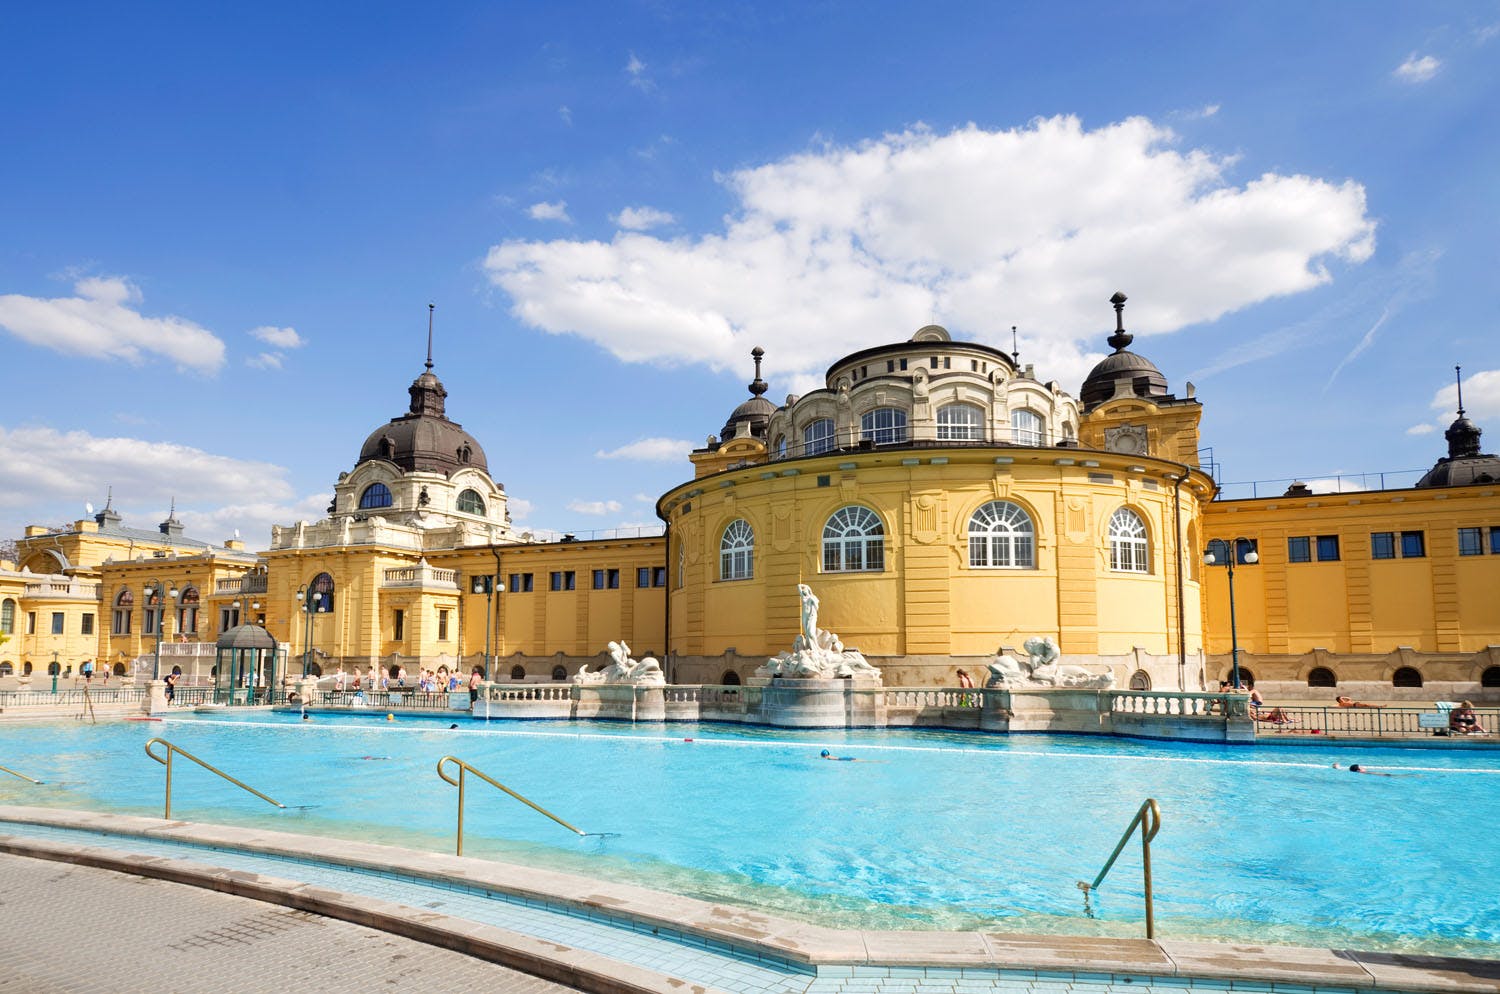 budapest - szechenyi thermal baths